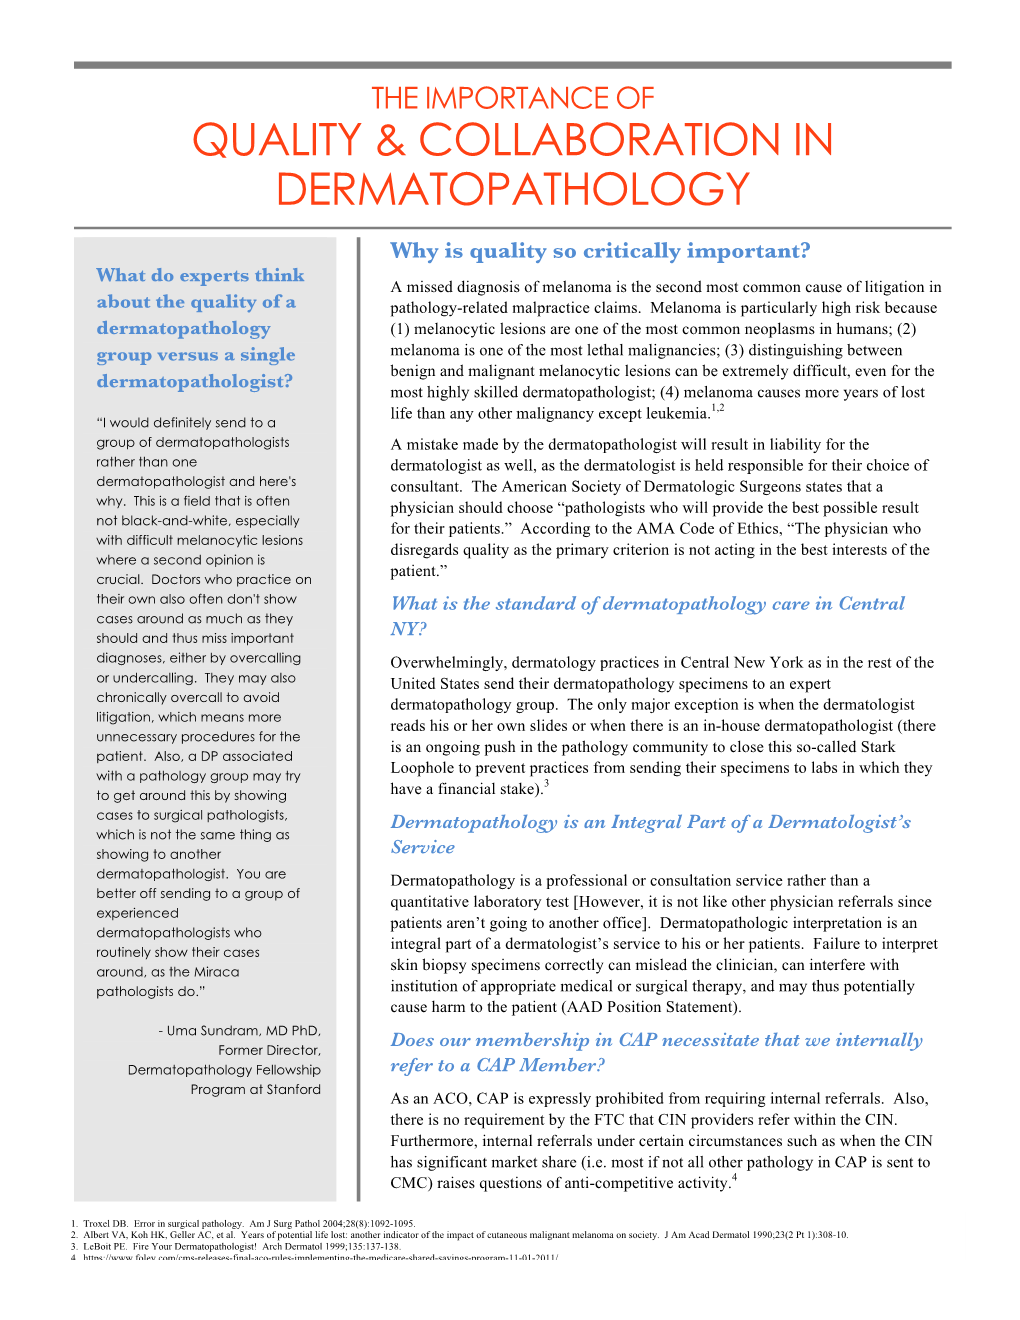 Quality & Collaboration in Dermatopathology